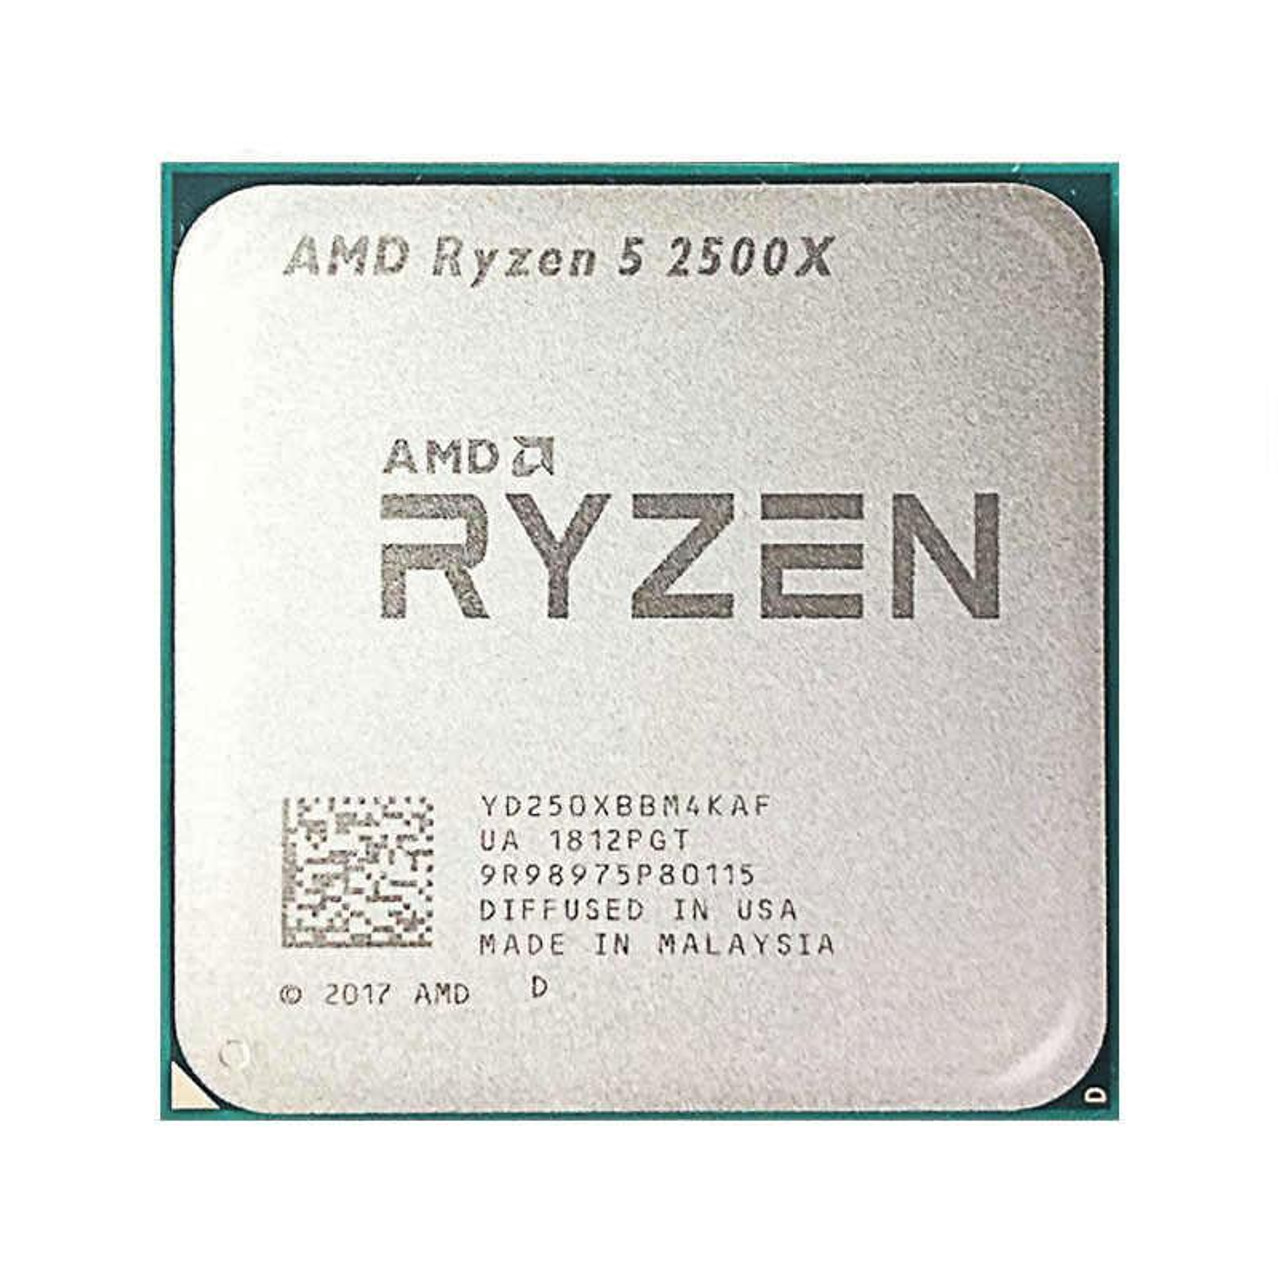 AMD Ryzen 5 2500X Quad-Core 3.60GHz 8MB L3 Cache Socket AM4 Processor